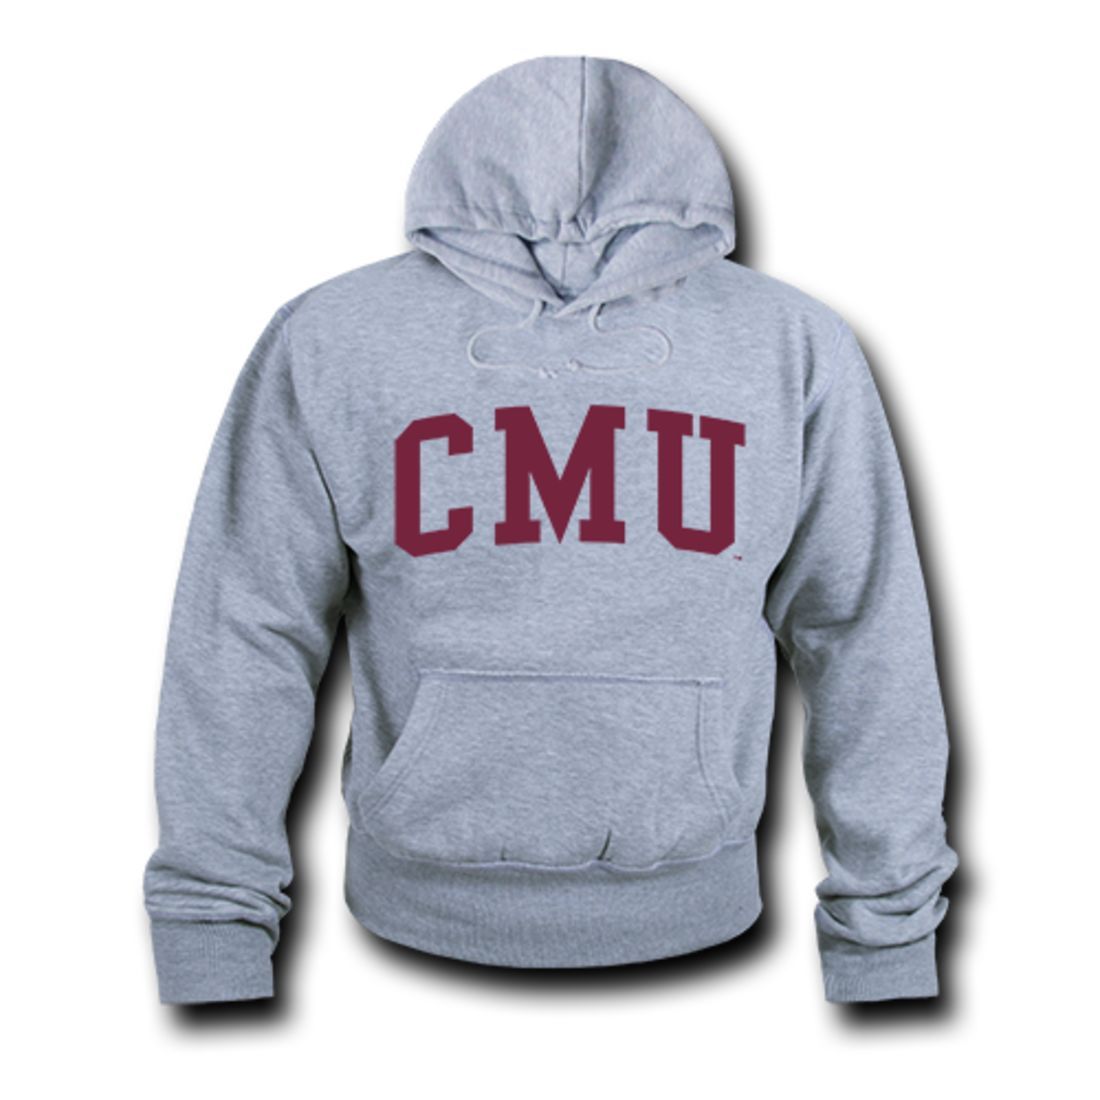 CMU Central Michigan University Game Day Hoodie Sweatshirt Heather Grey-Campus-Wardrobe